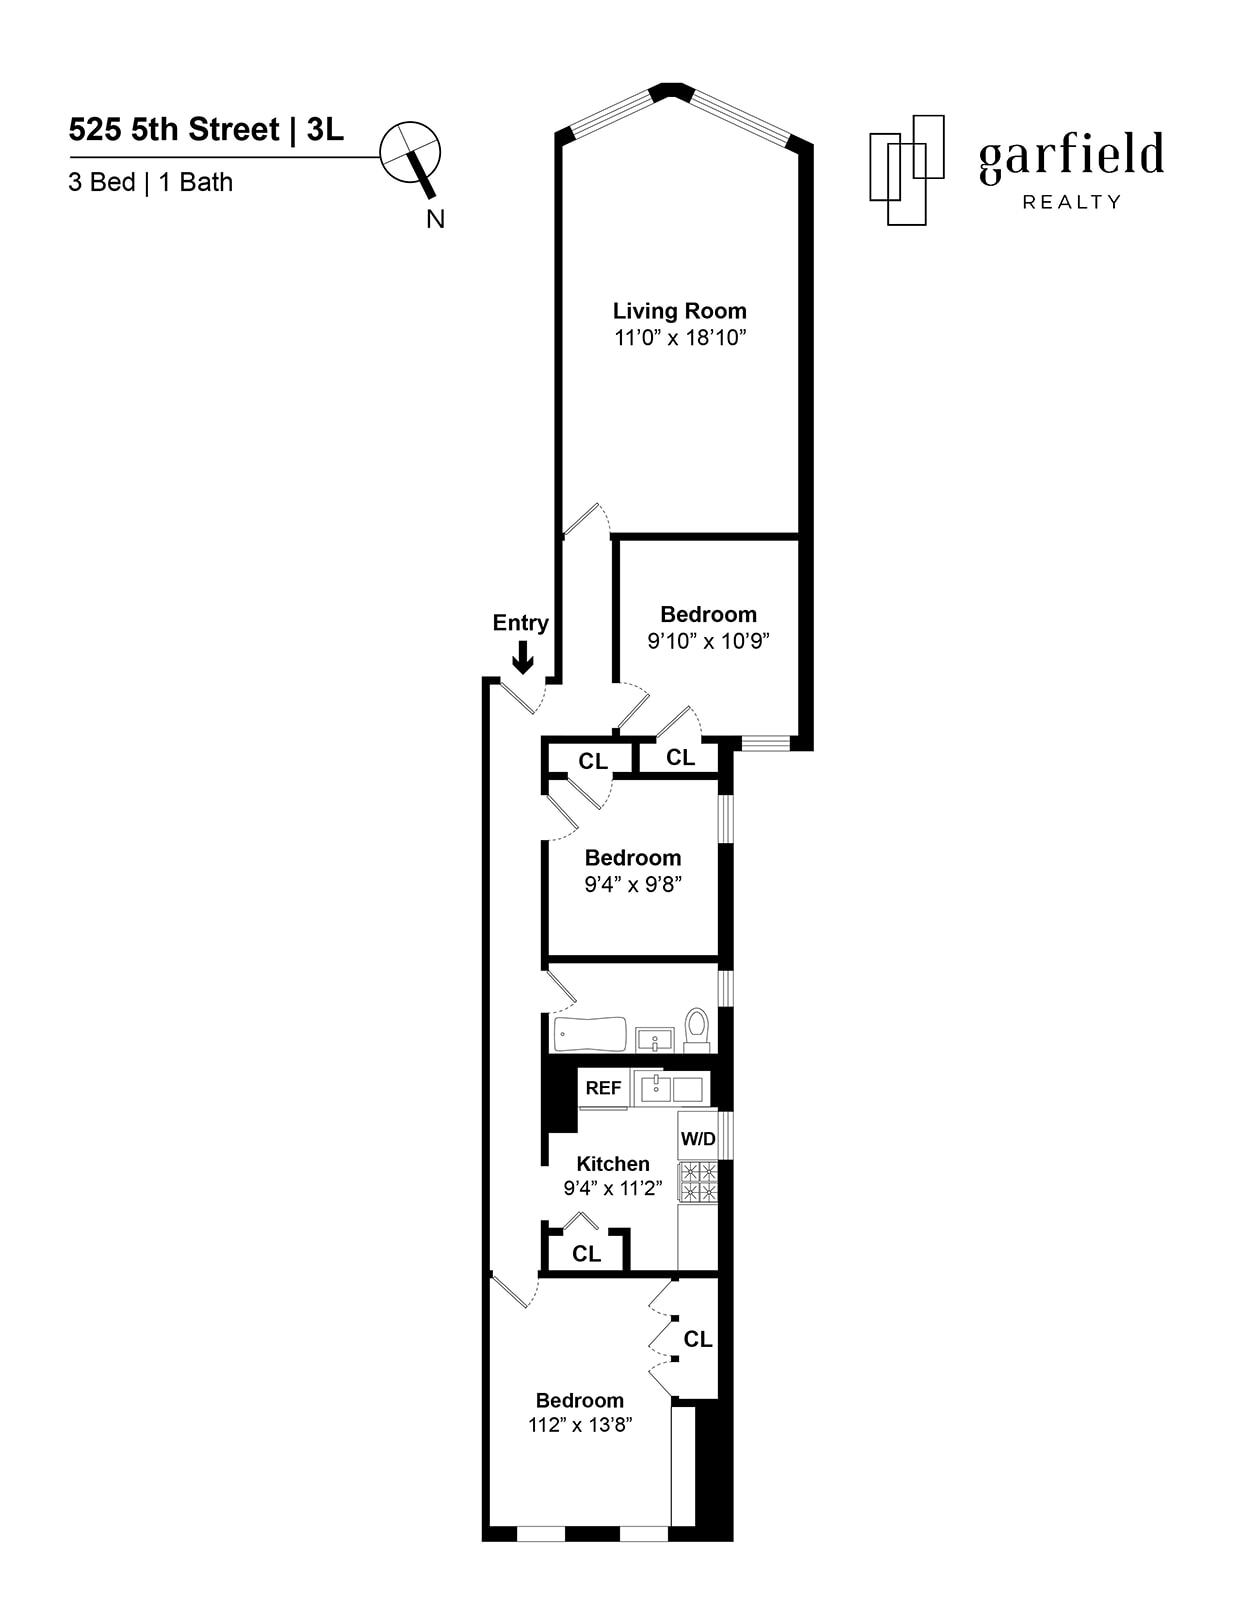 Floorplan of 525 5th St